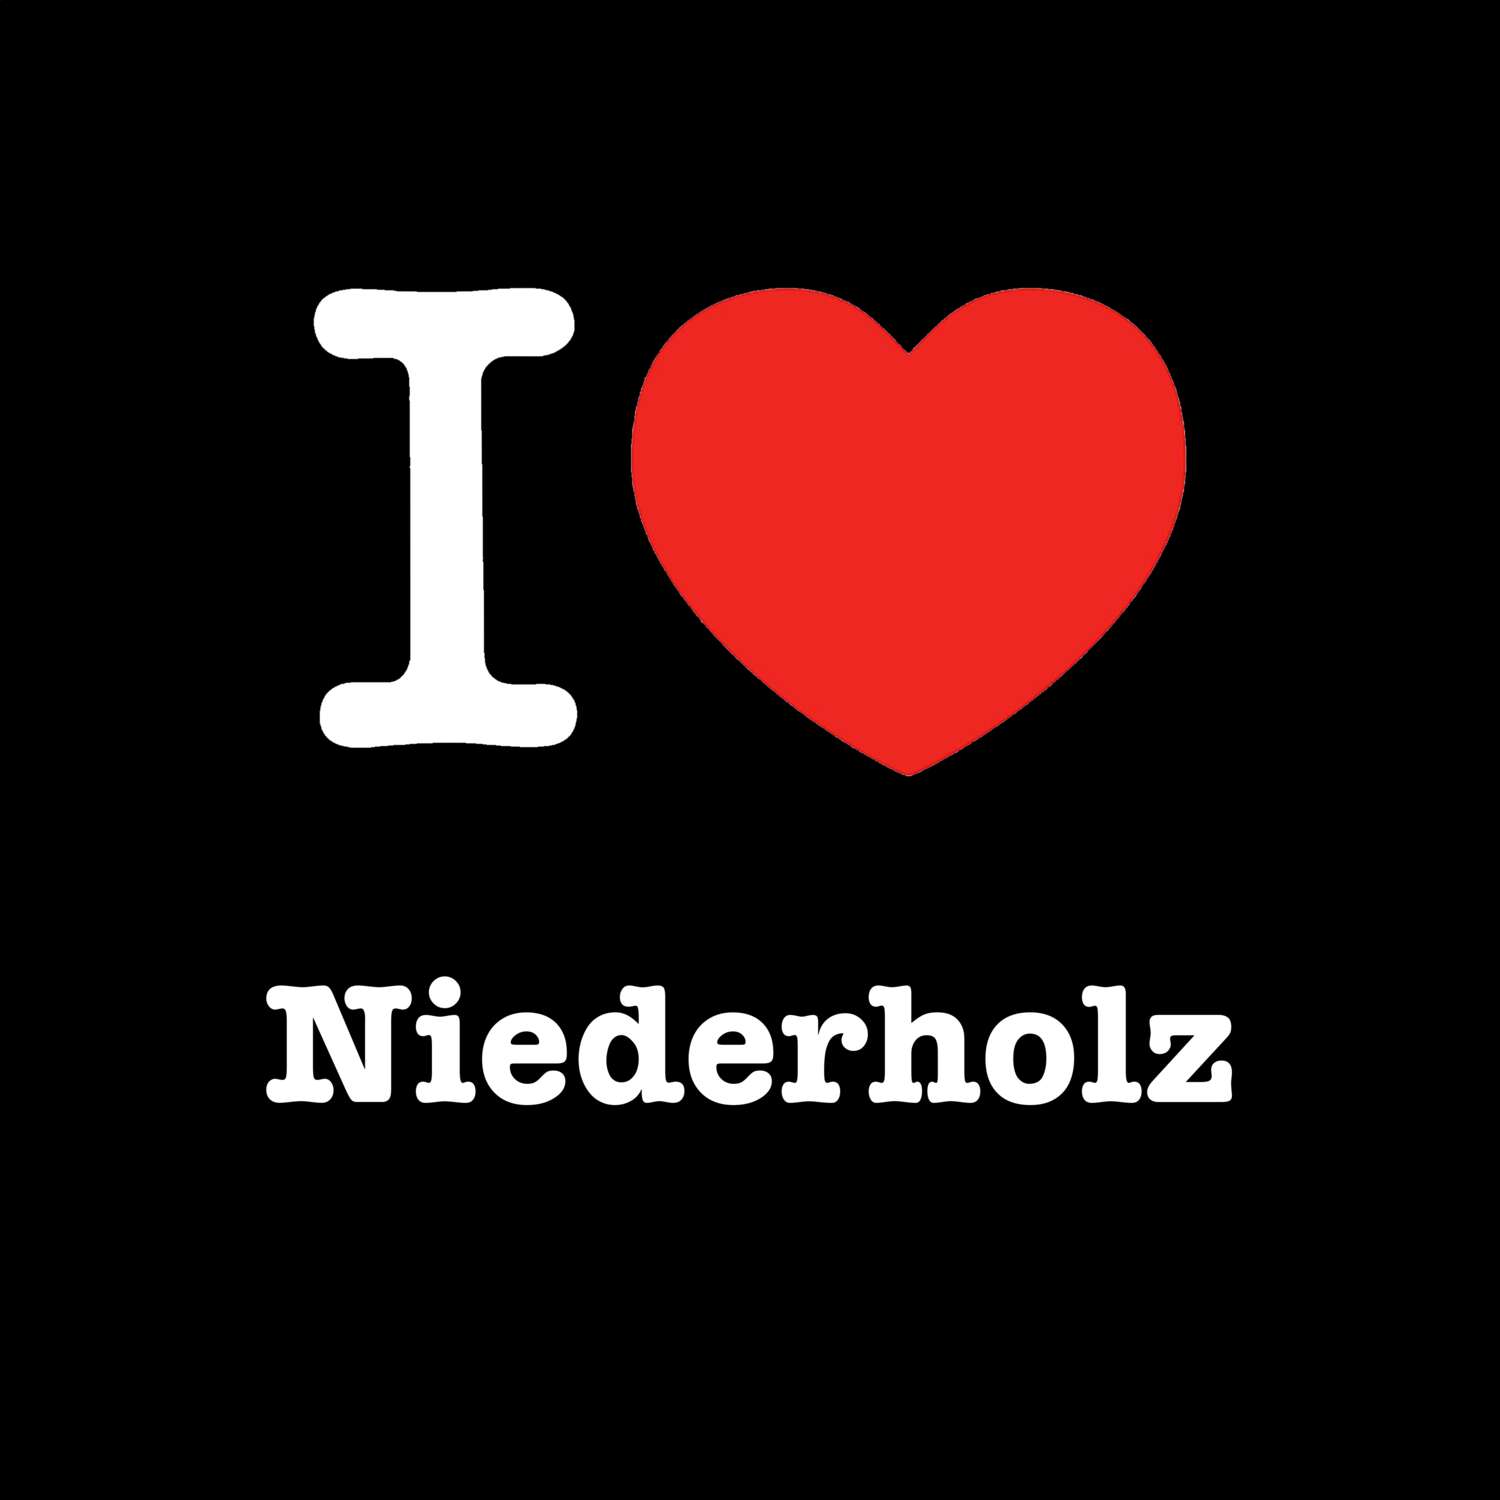 Niederholz T-Shirt »I love«